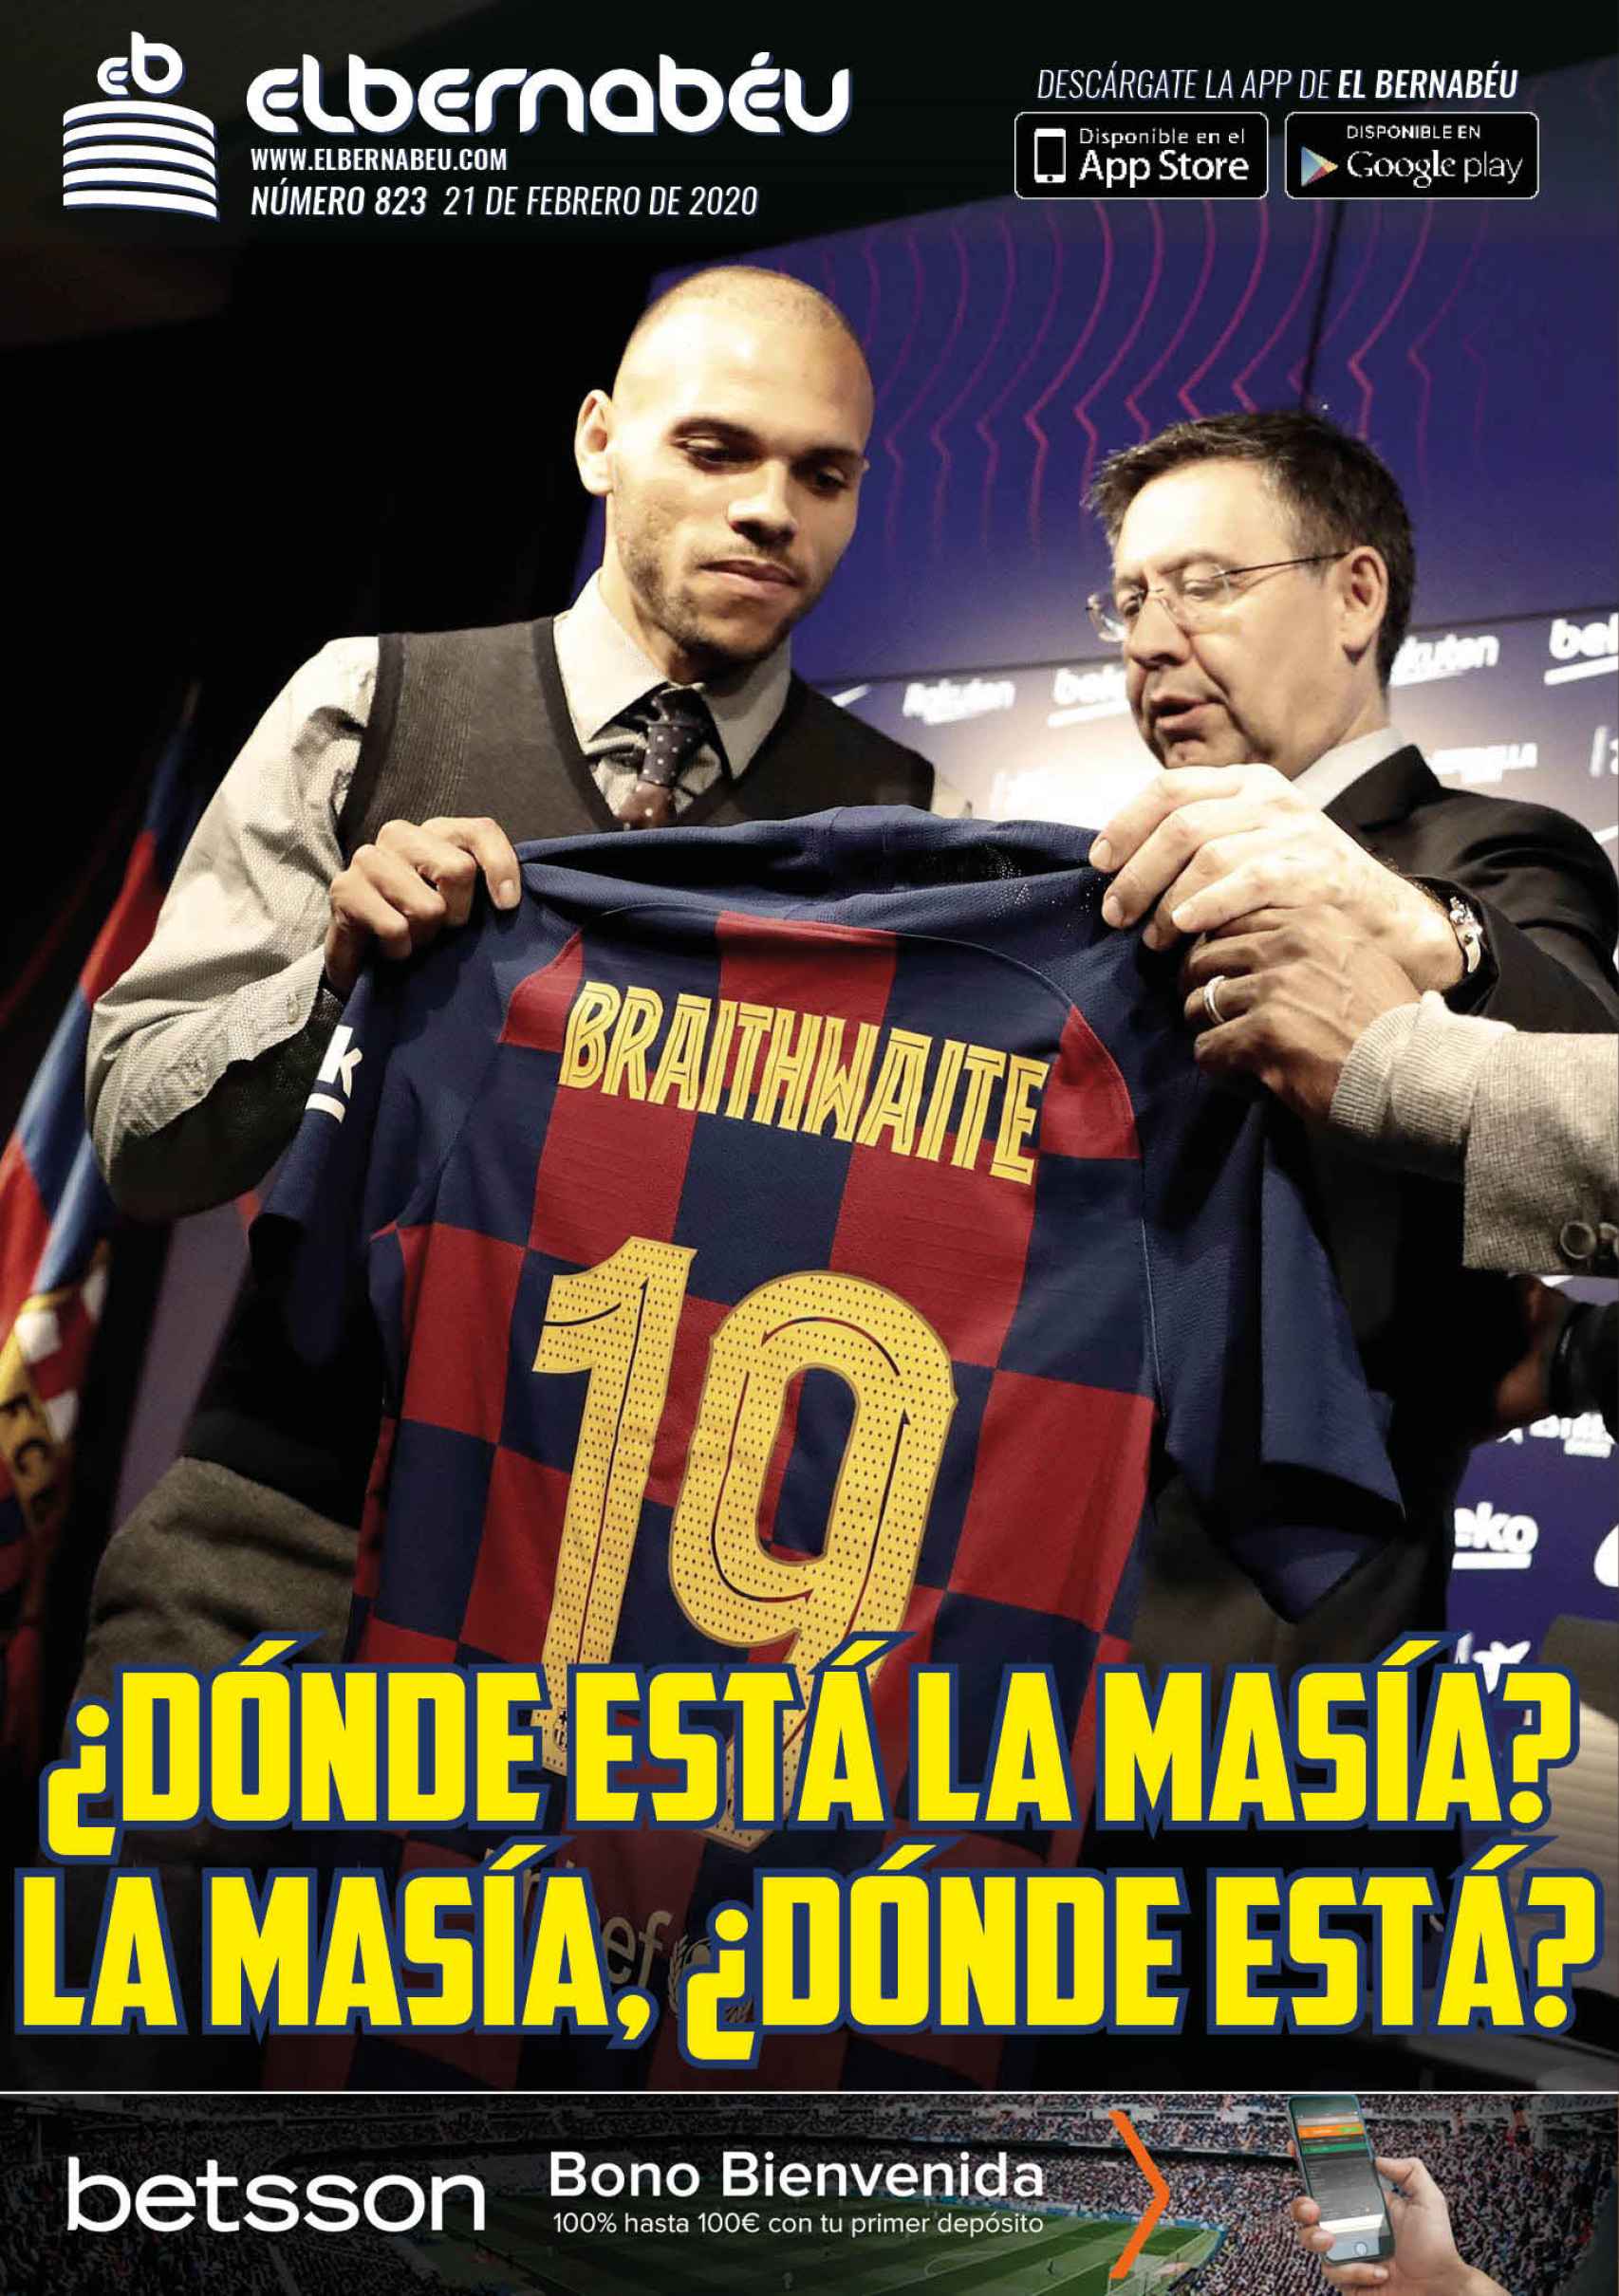 La portada de El Bernabéu (21/02/2020)